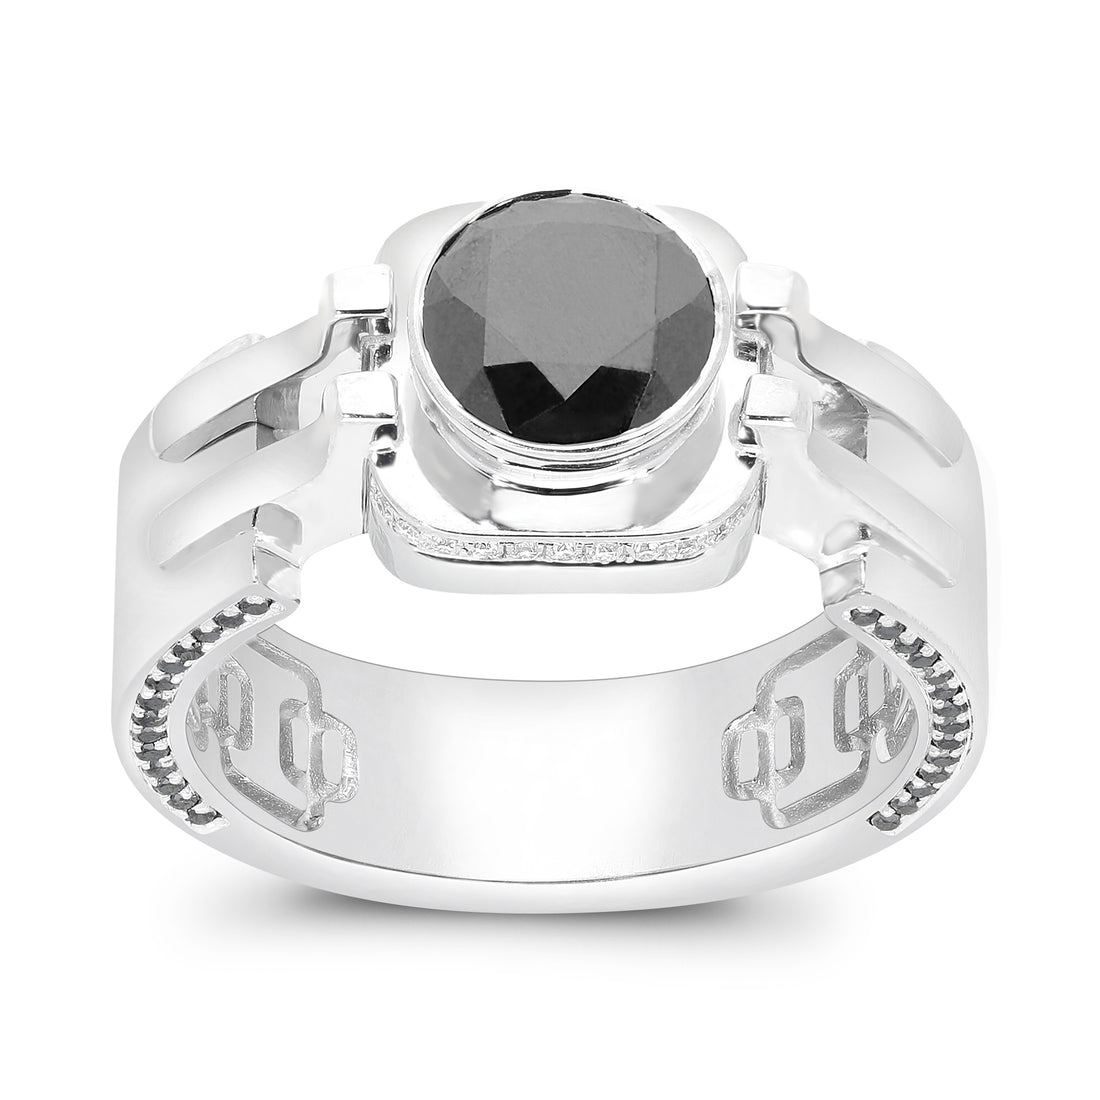 Gorgeous Black Men Diamond Ring. 2.70 carat round cut gorgeous black natural diamond - GIA certificate